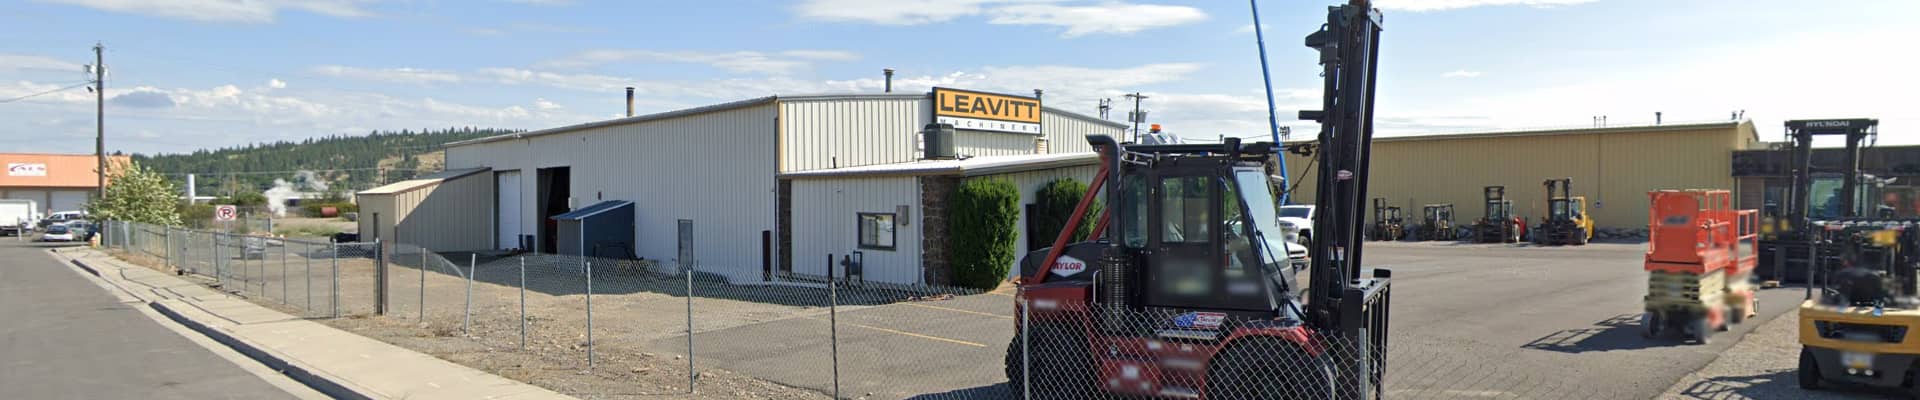 Outside the Leavitt Machinery Building